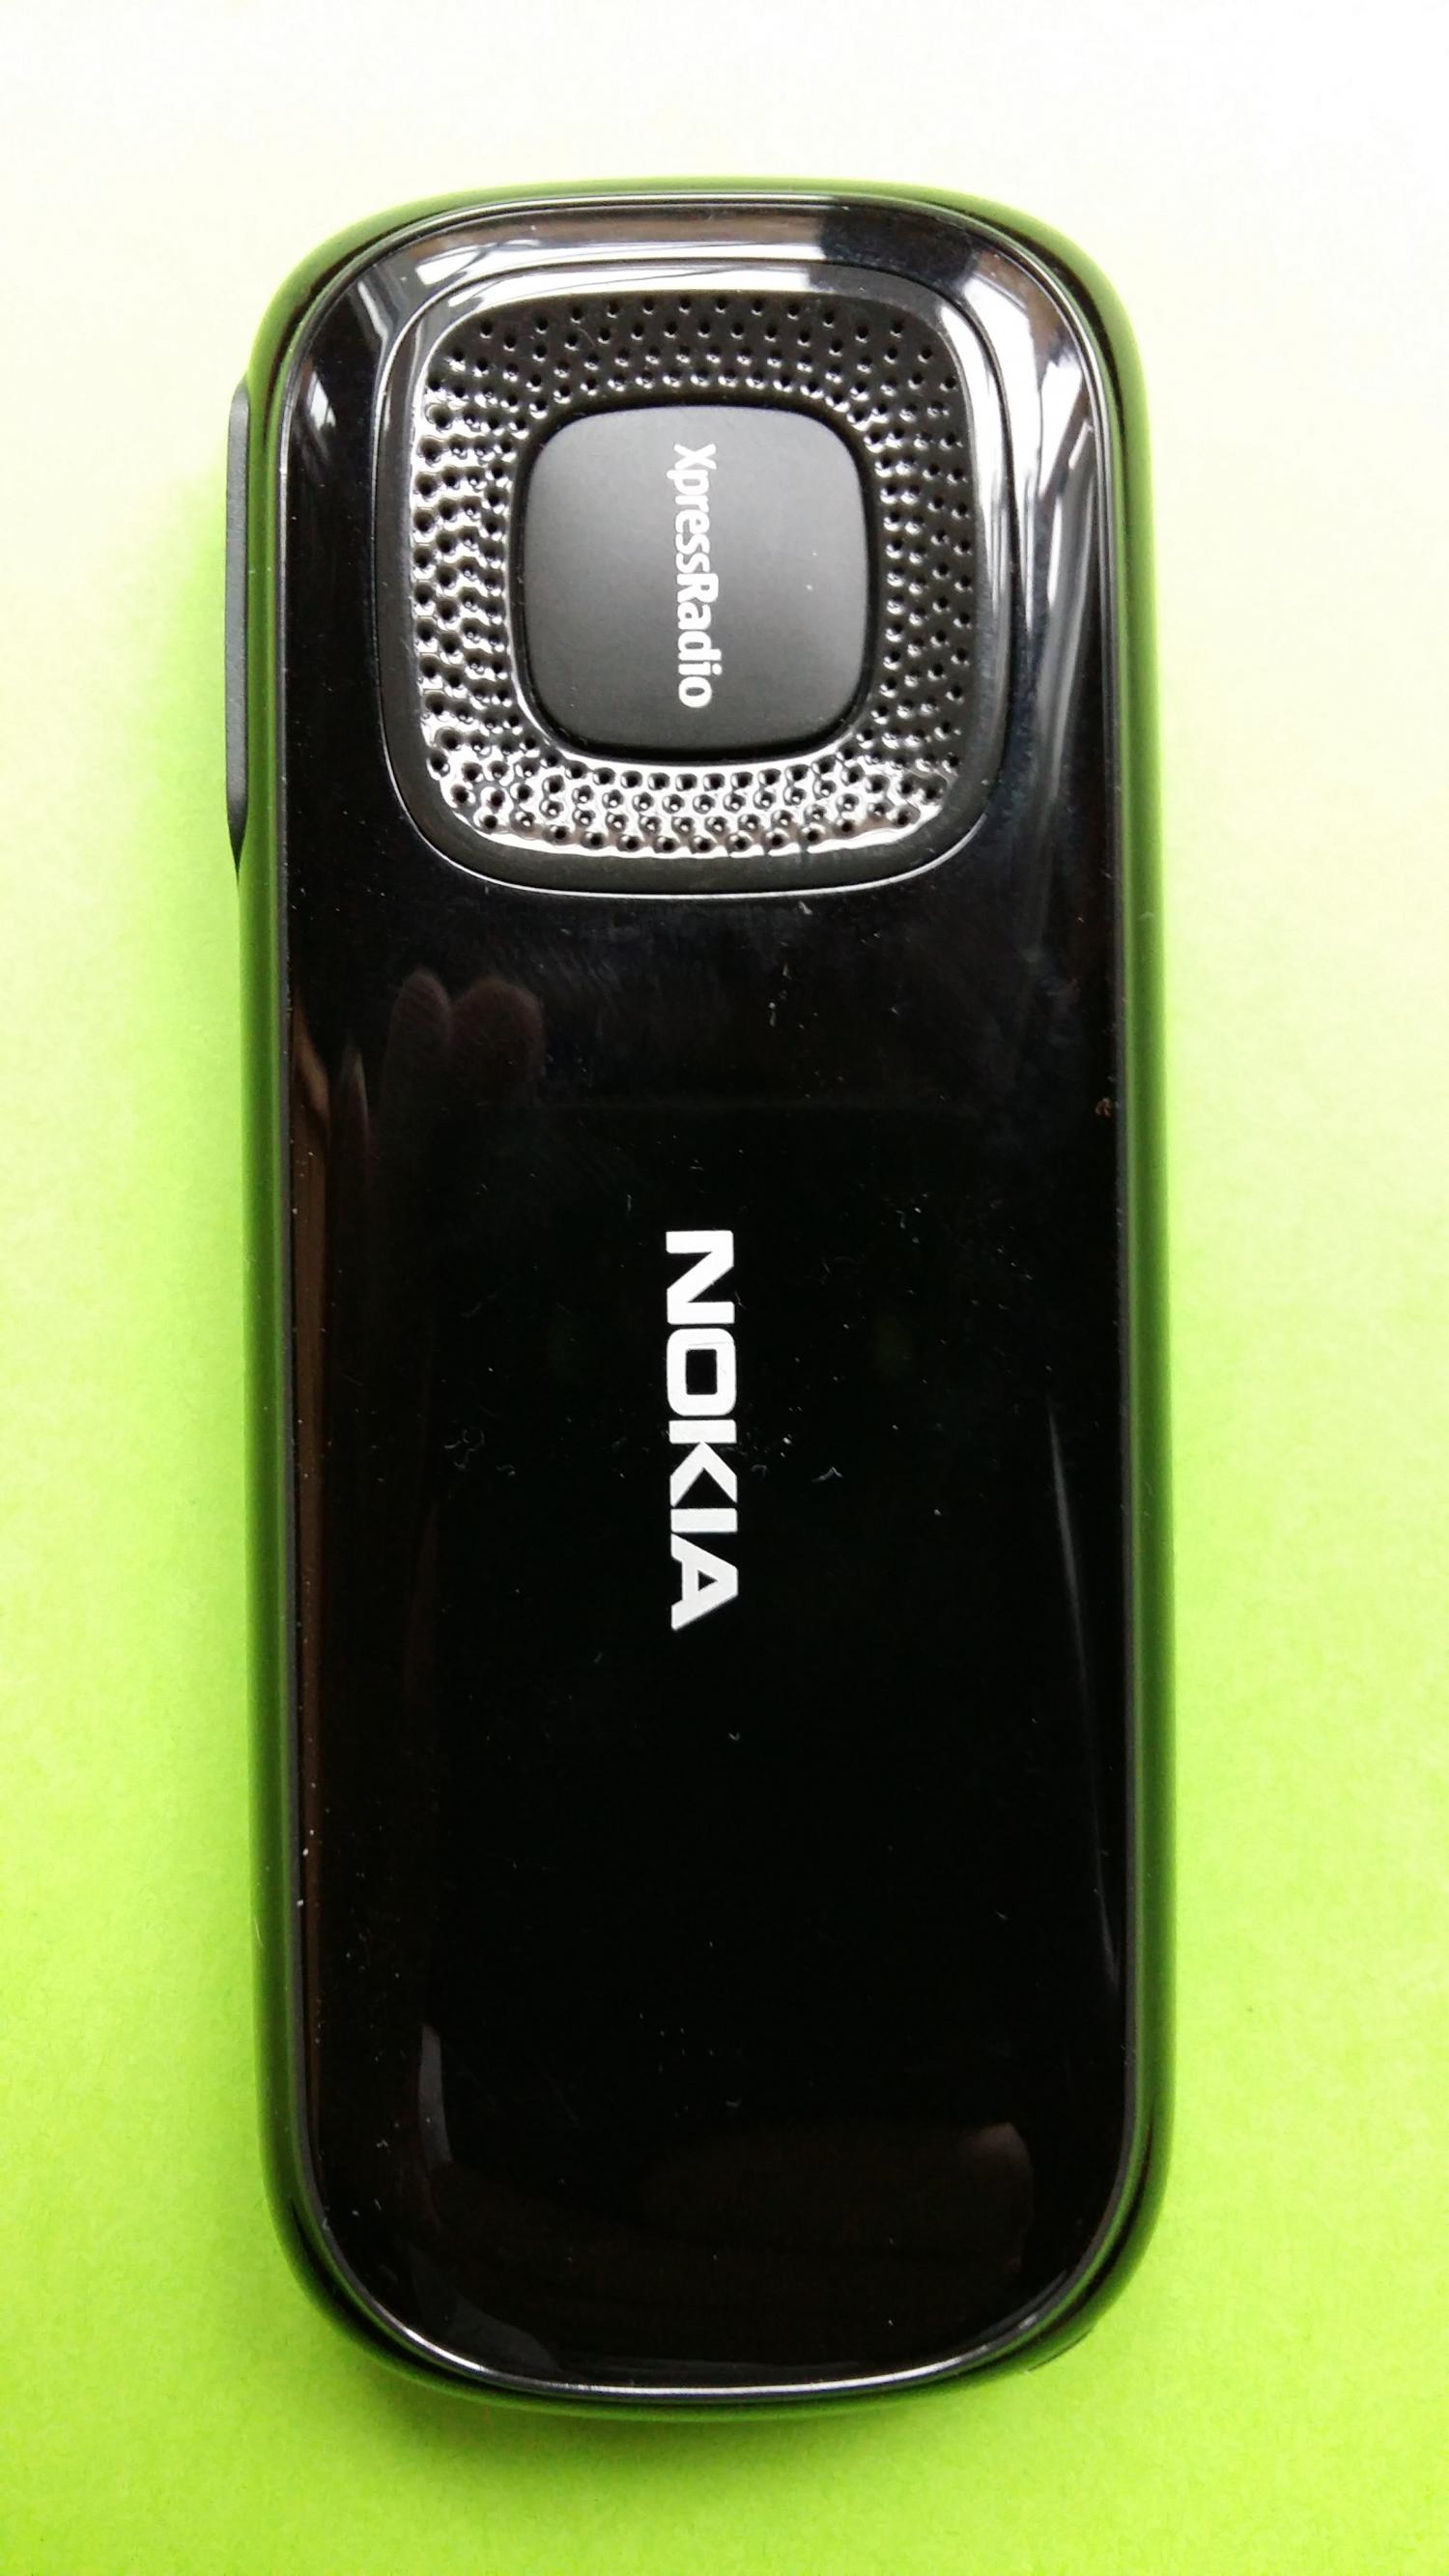 image-7338838-Nokia 5030C-2 XpressRadio (2)2.jpg